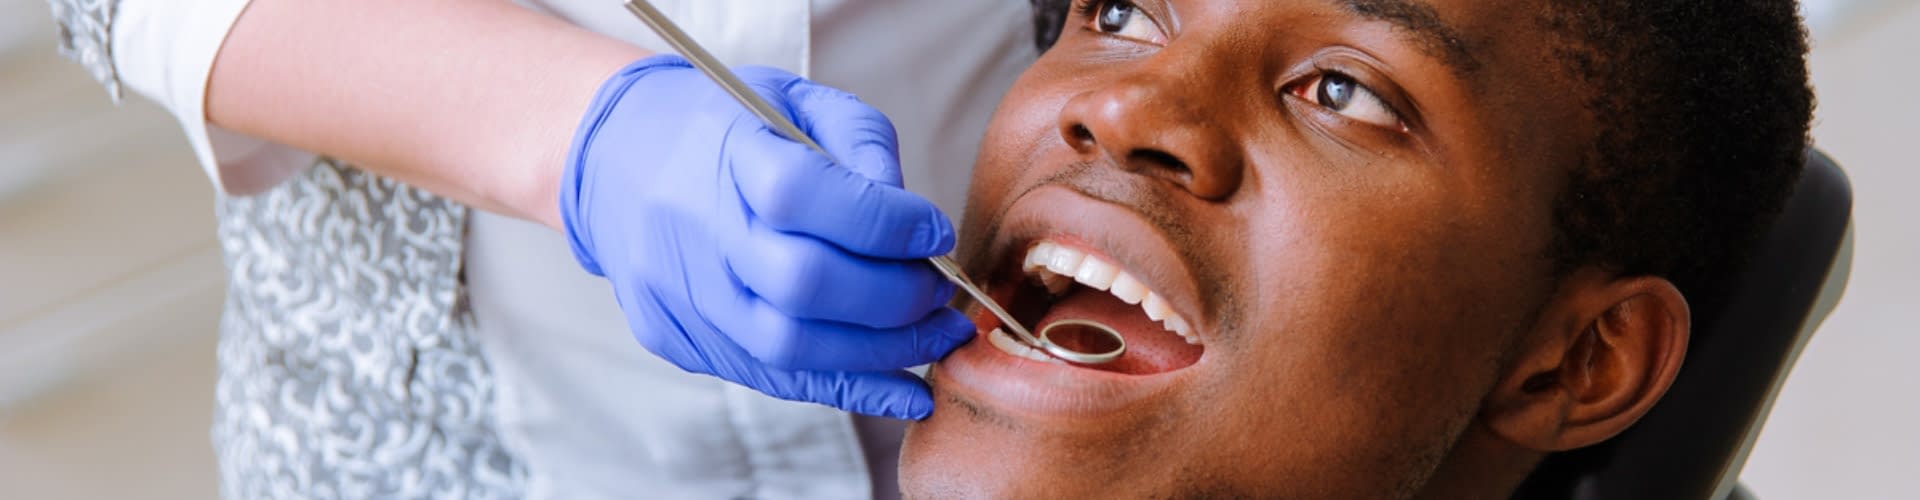 dental session